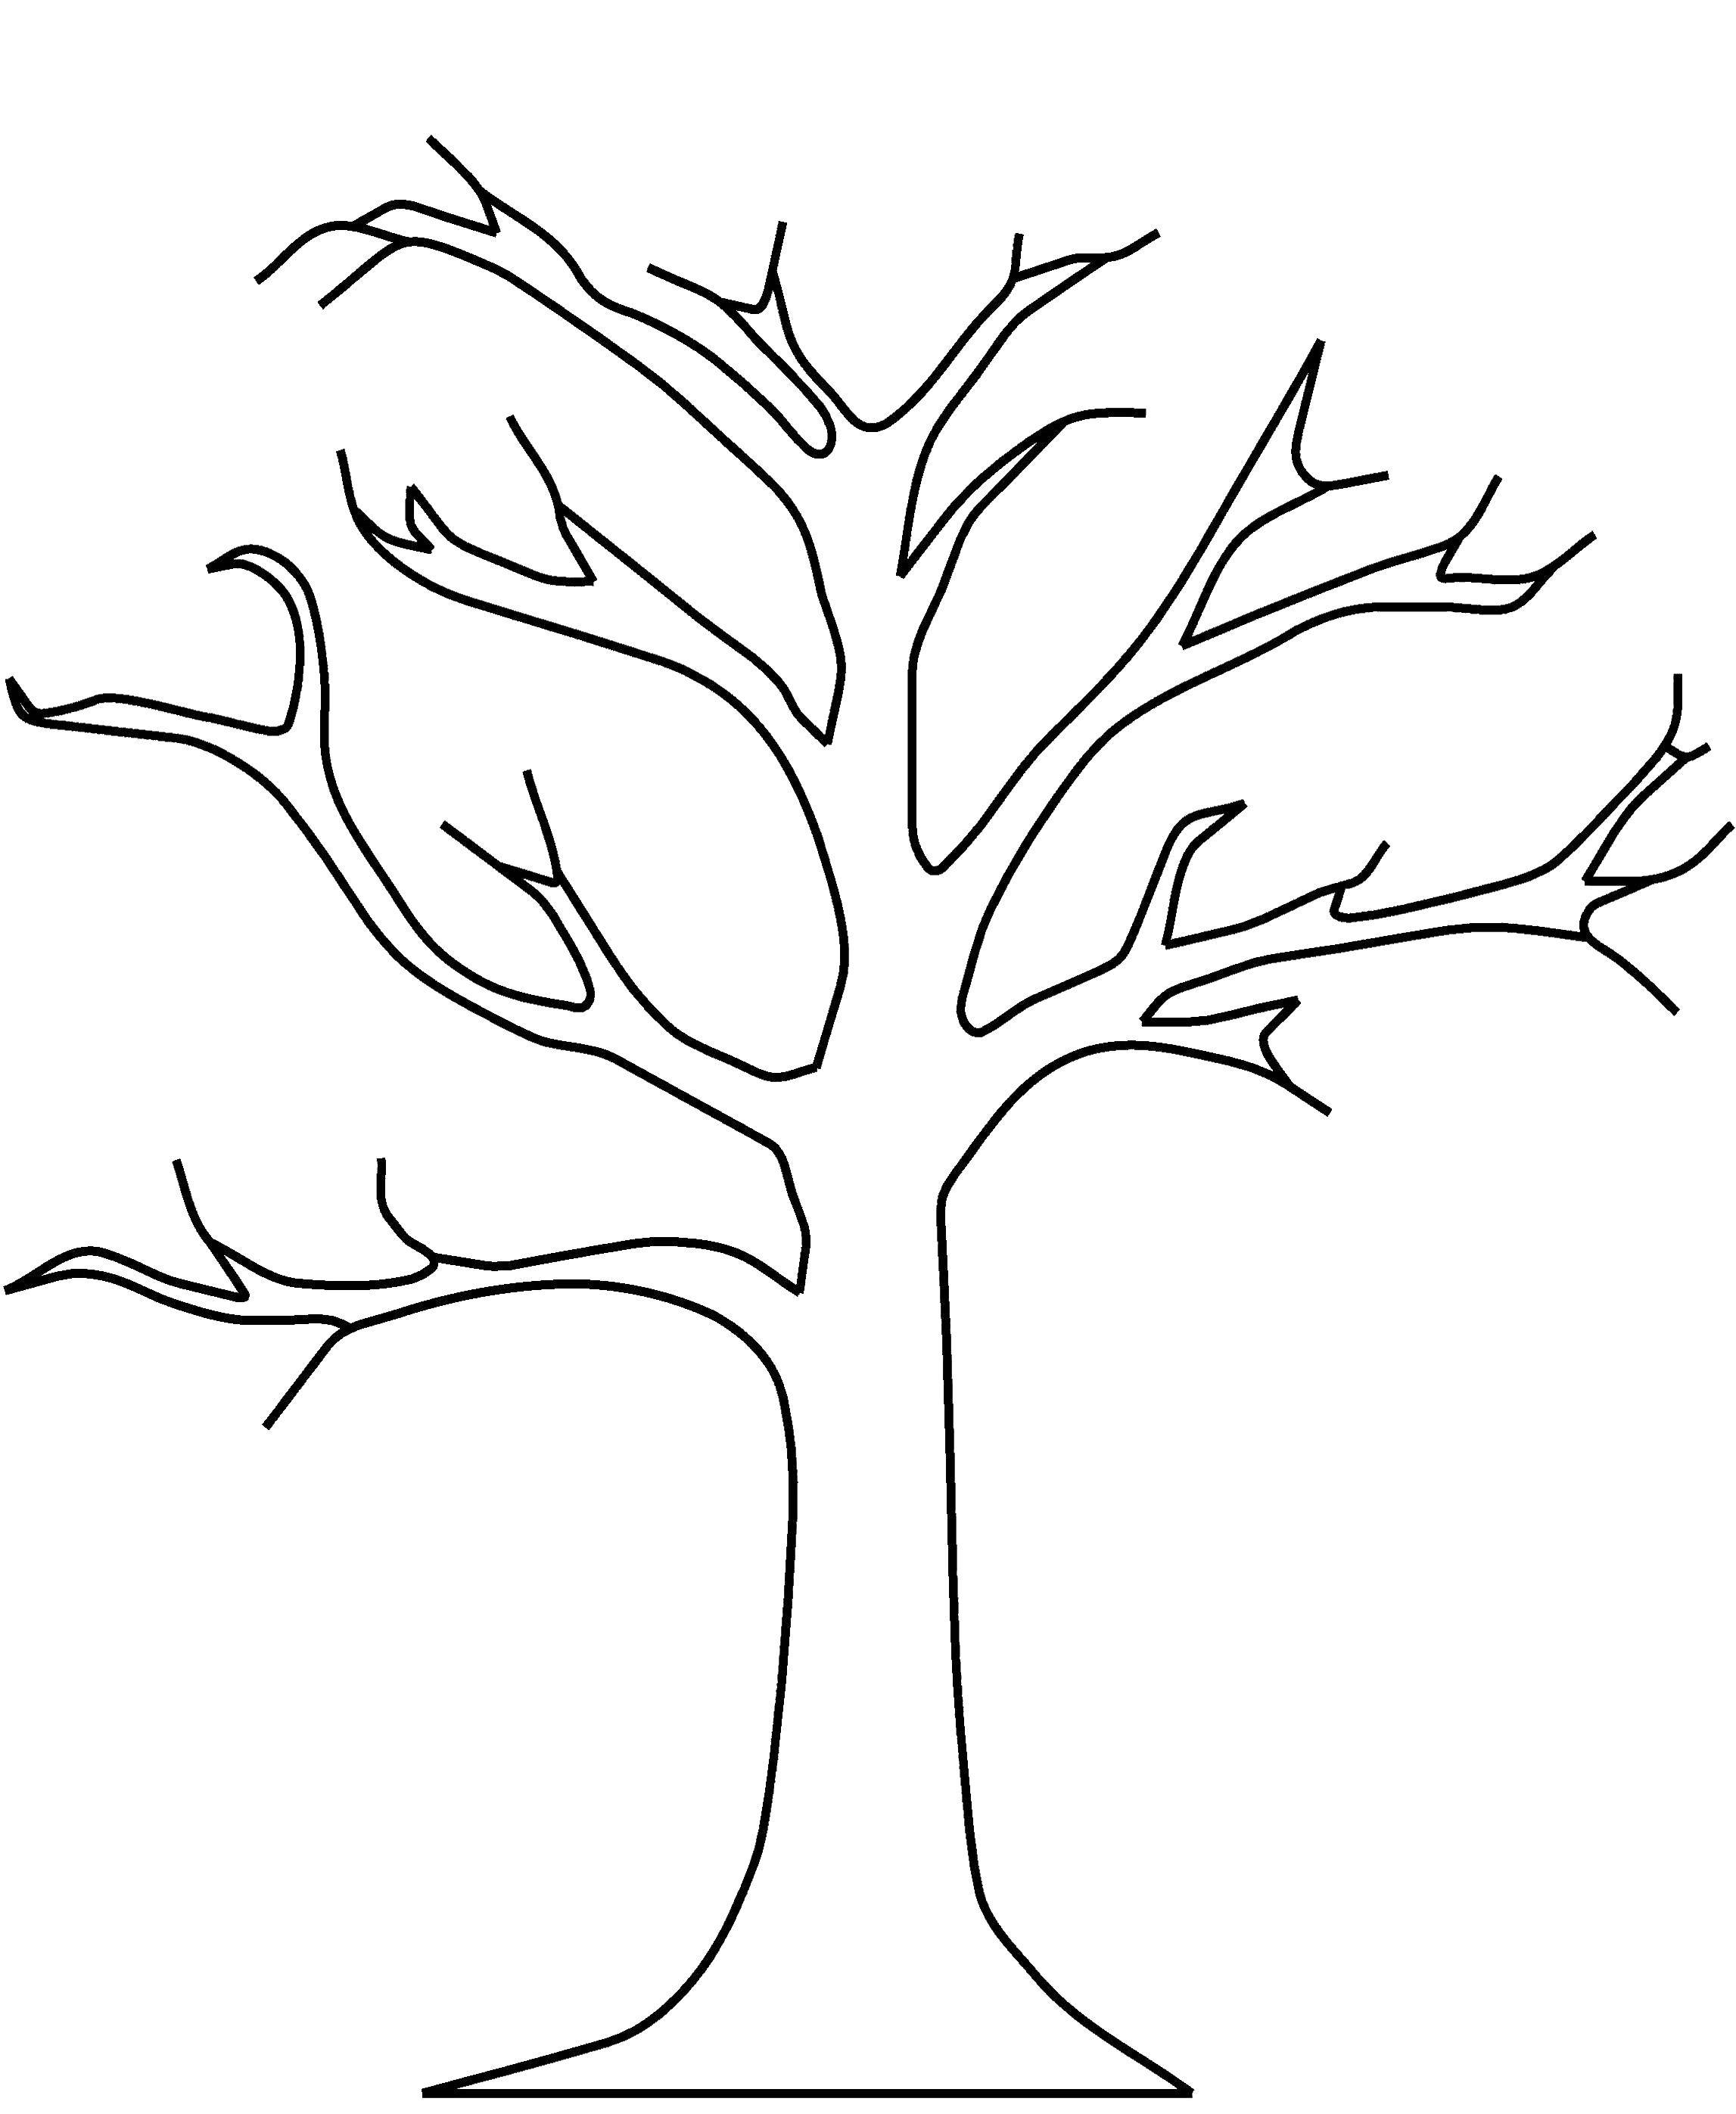 Раскраски Раскраска Голые ветви Контур дерева, Раскраски аниме.